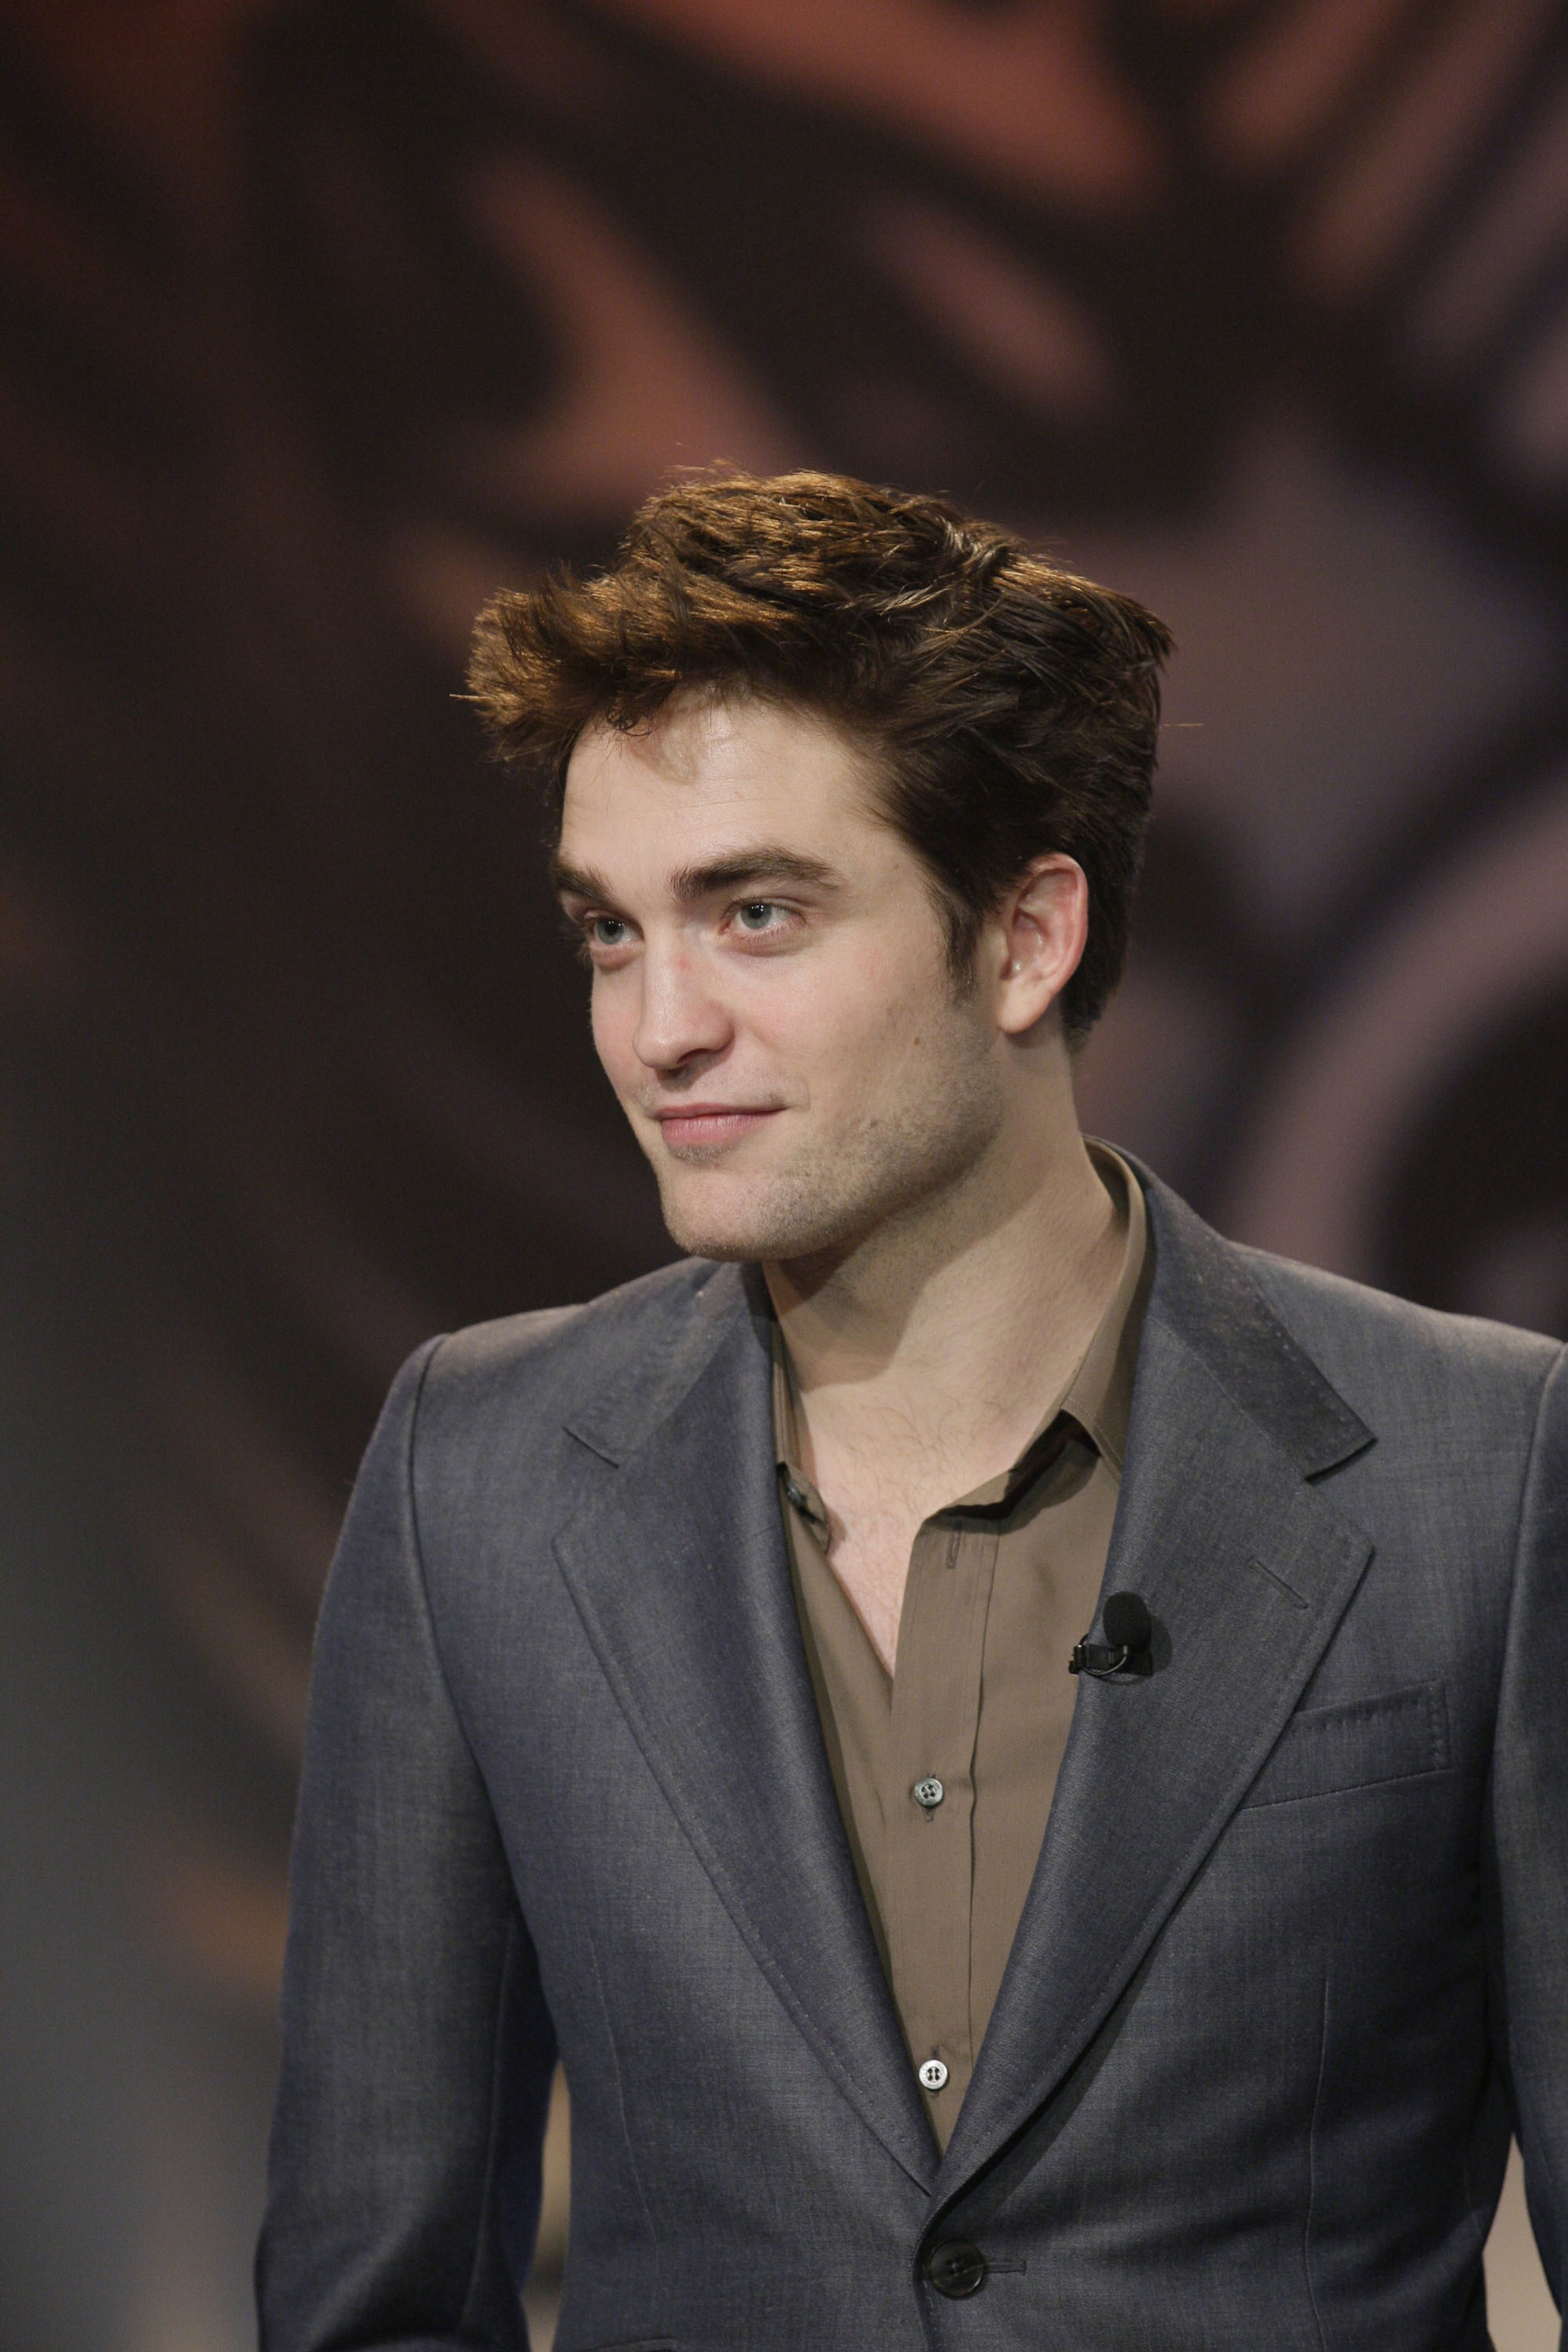 Robert Pattinson - Twilight Series Photo (25883284) - Fanpop